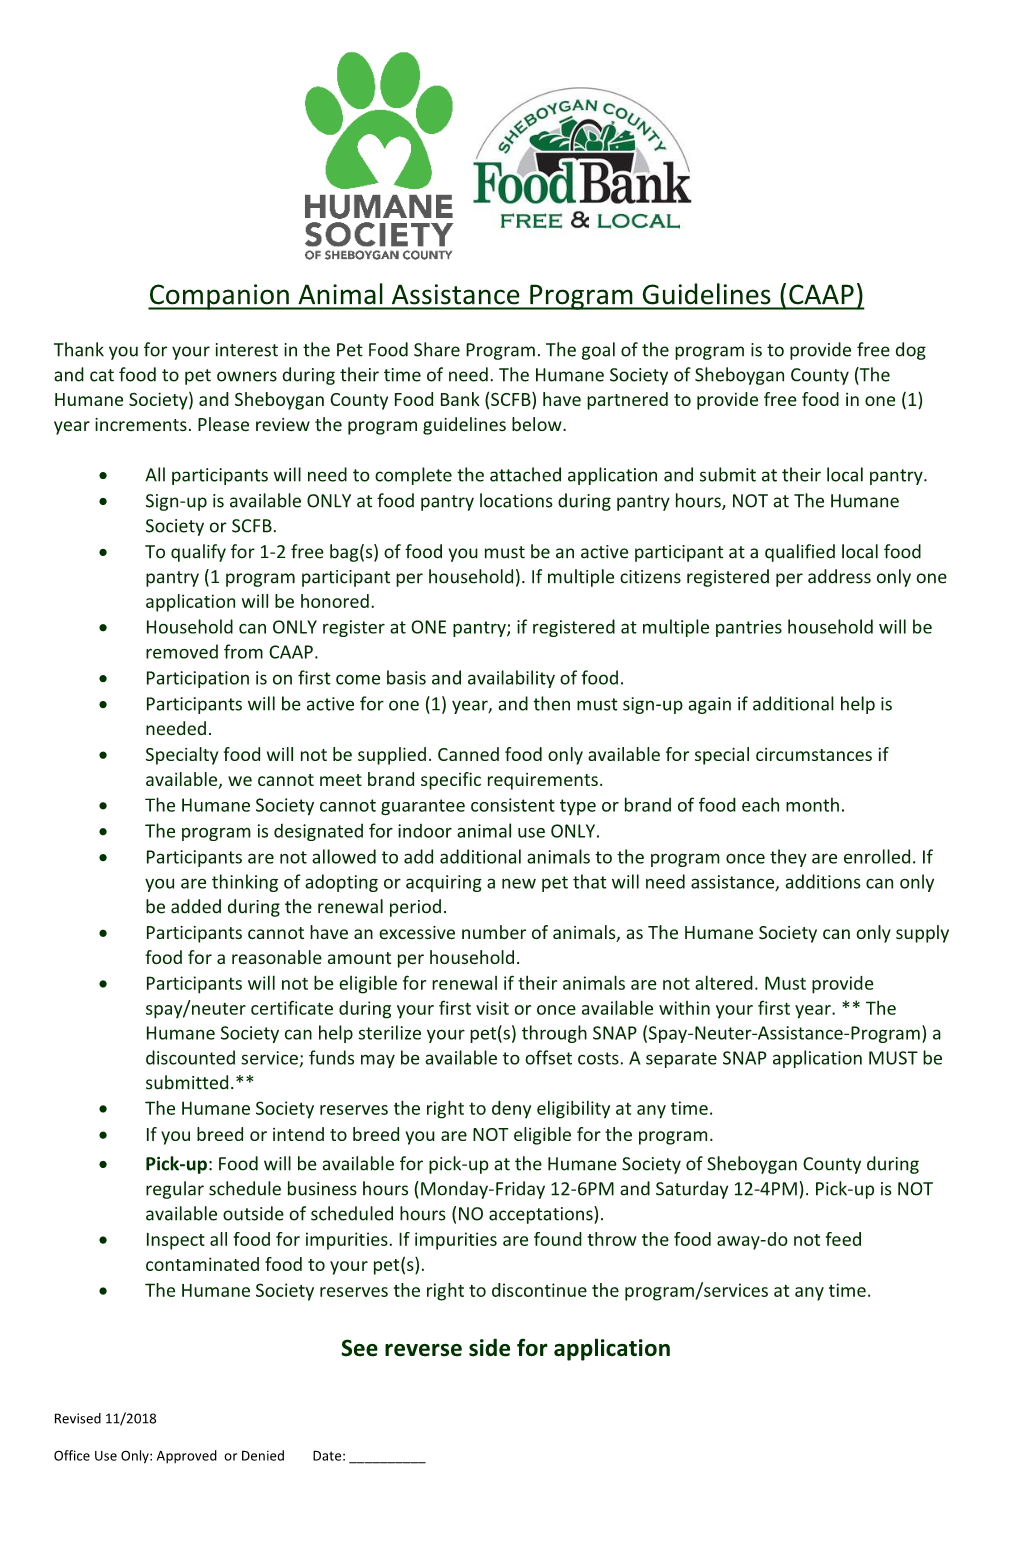 Companion Animal Assistance Program Guidelines (CAAP) Companion Animal Assistance Program Guidelines (CAAP)